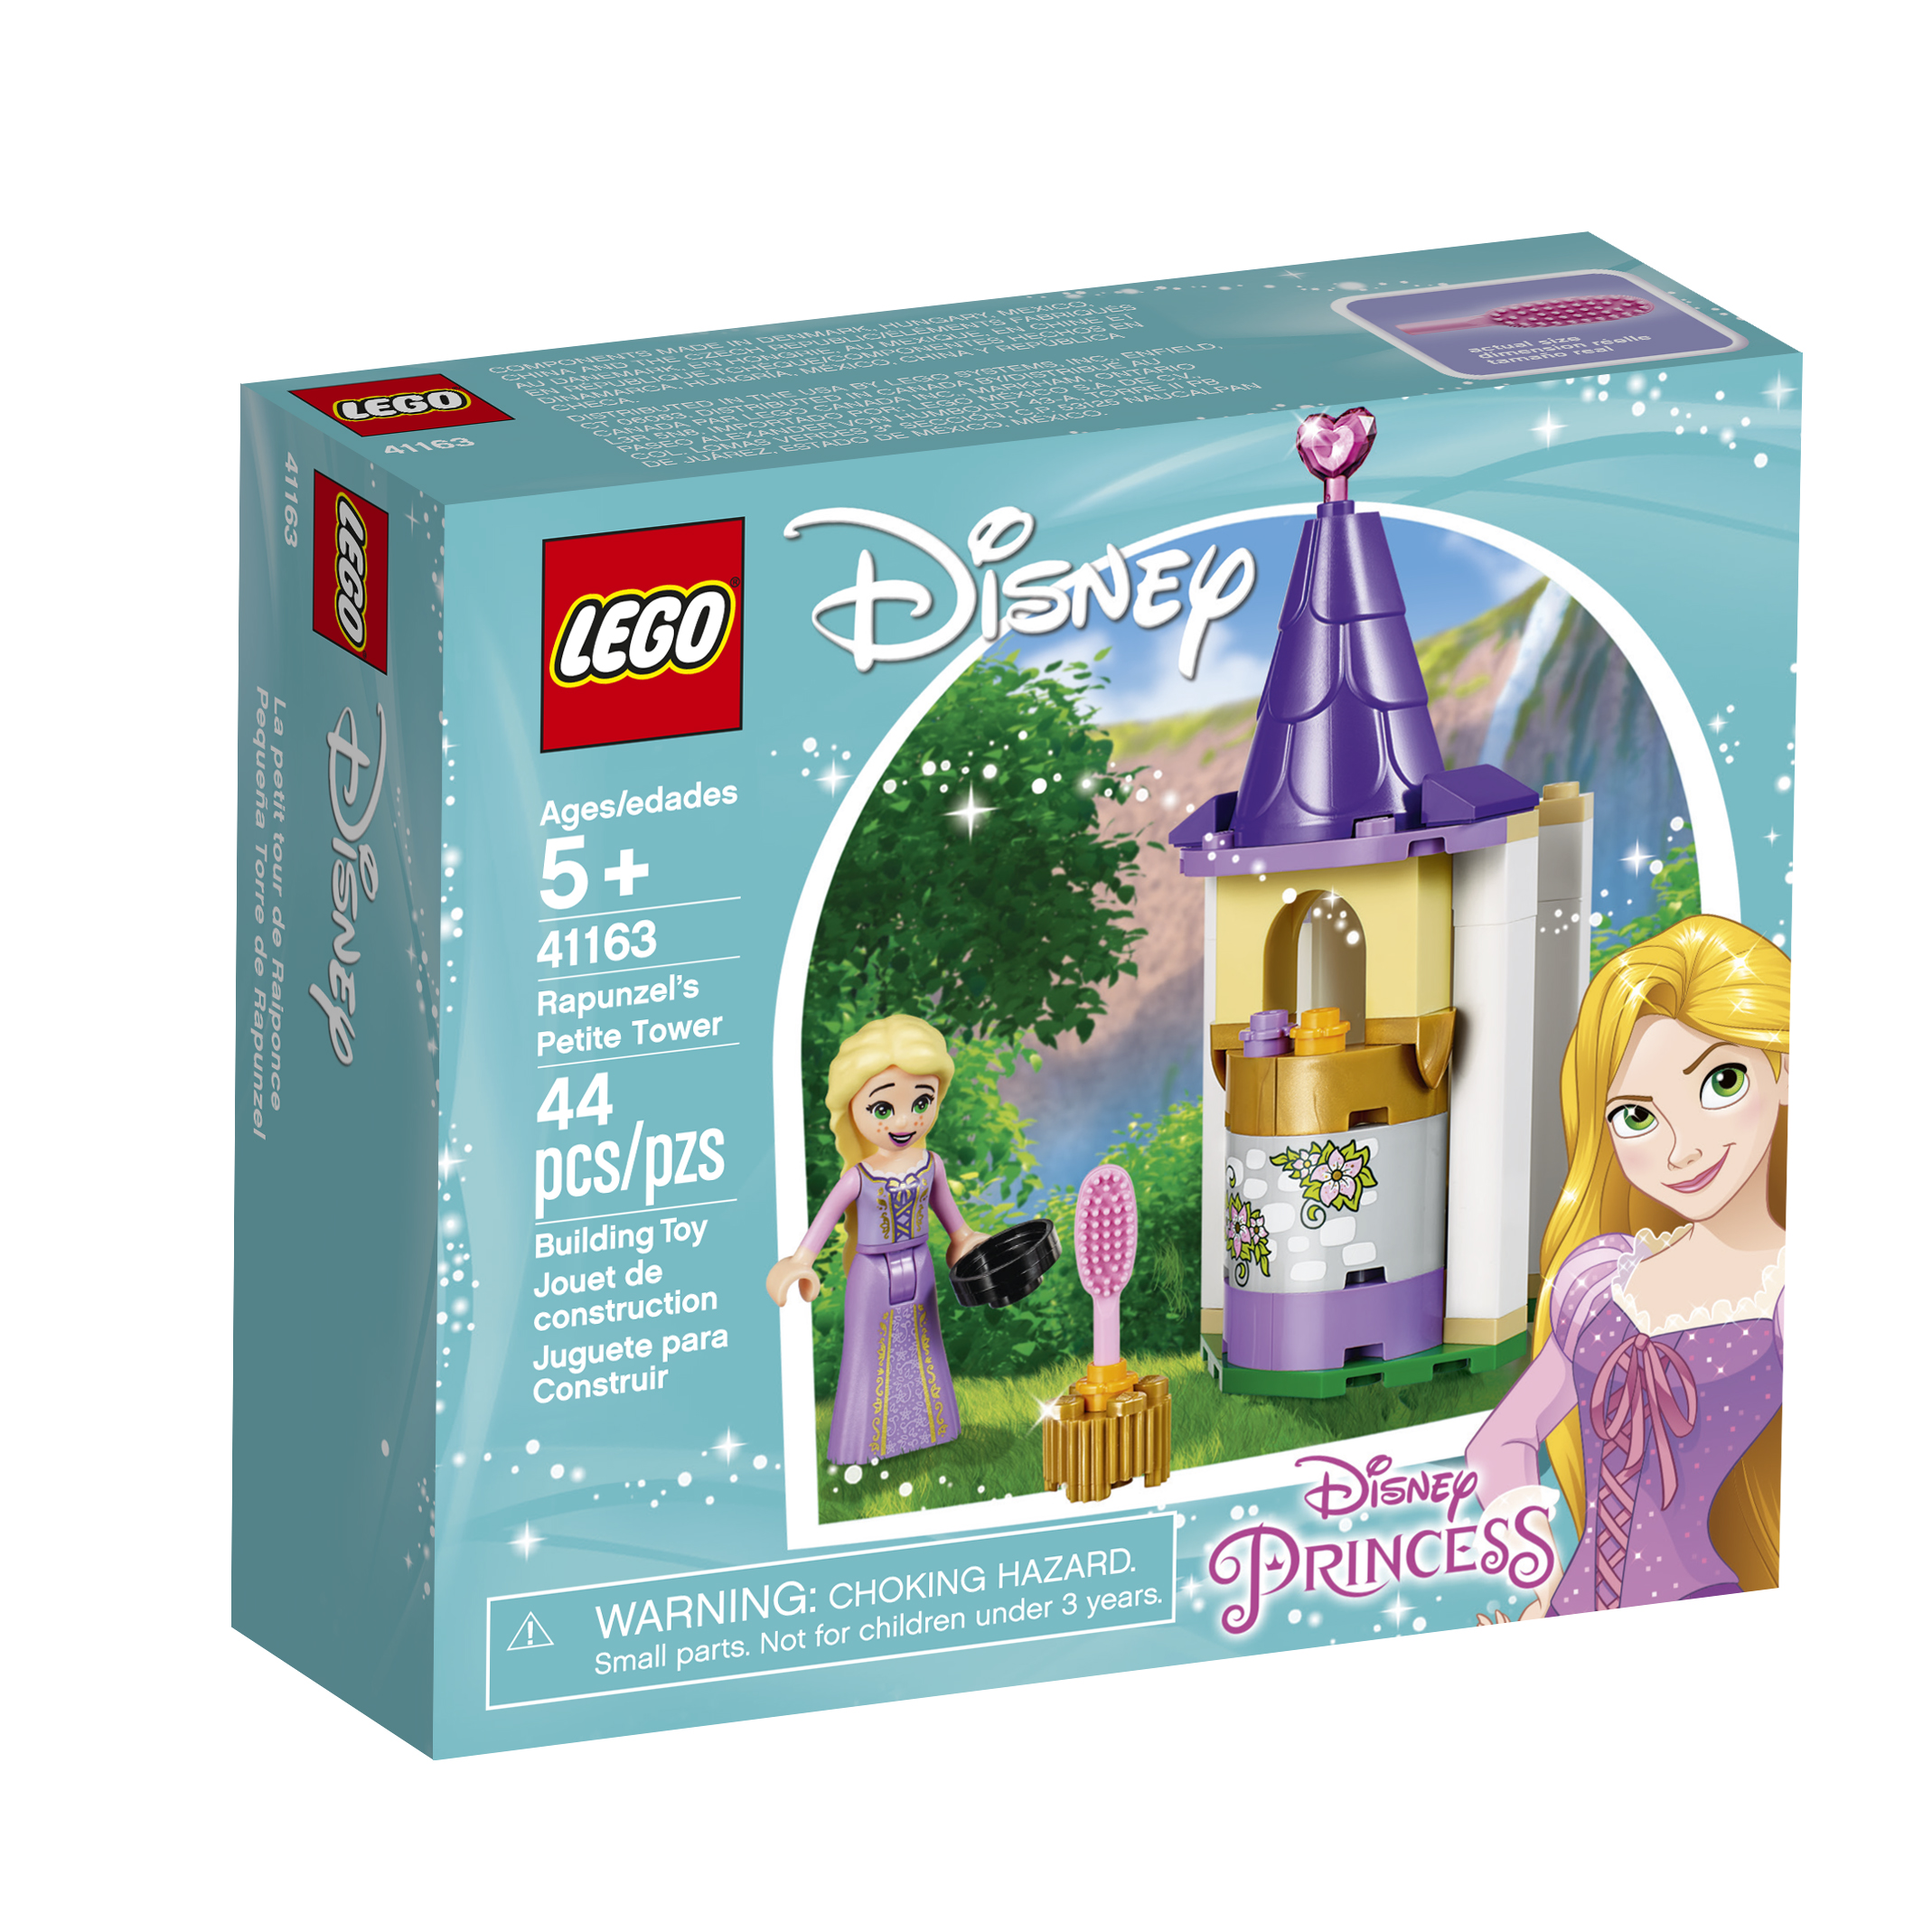 LEGO Disney Princess Rapunzel's Petite Tower 41163 - image 5 of 8